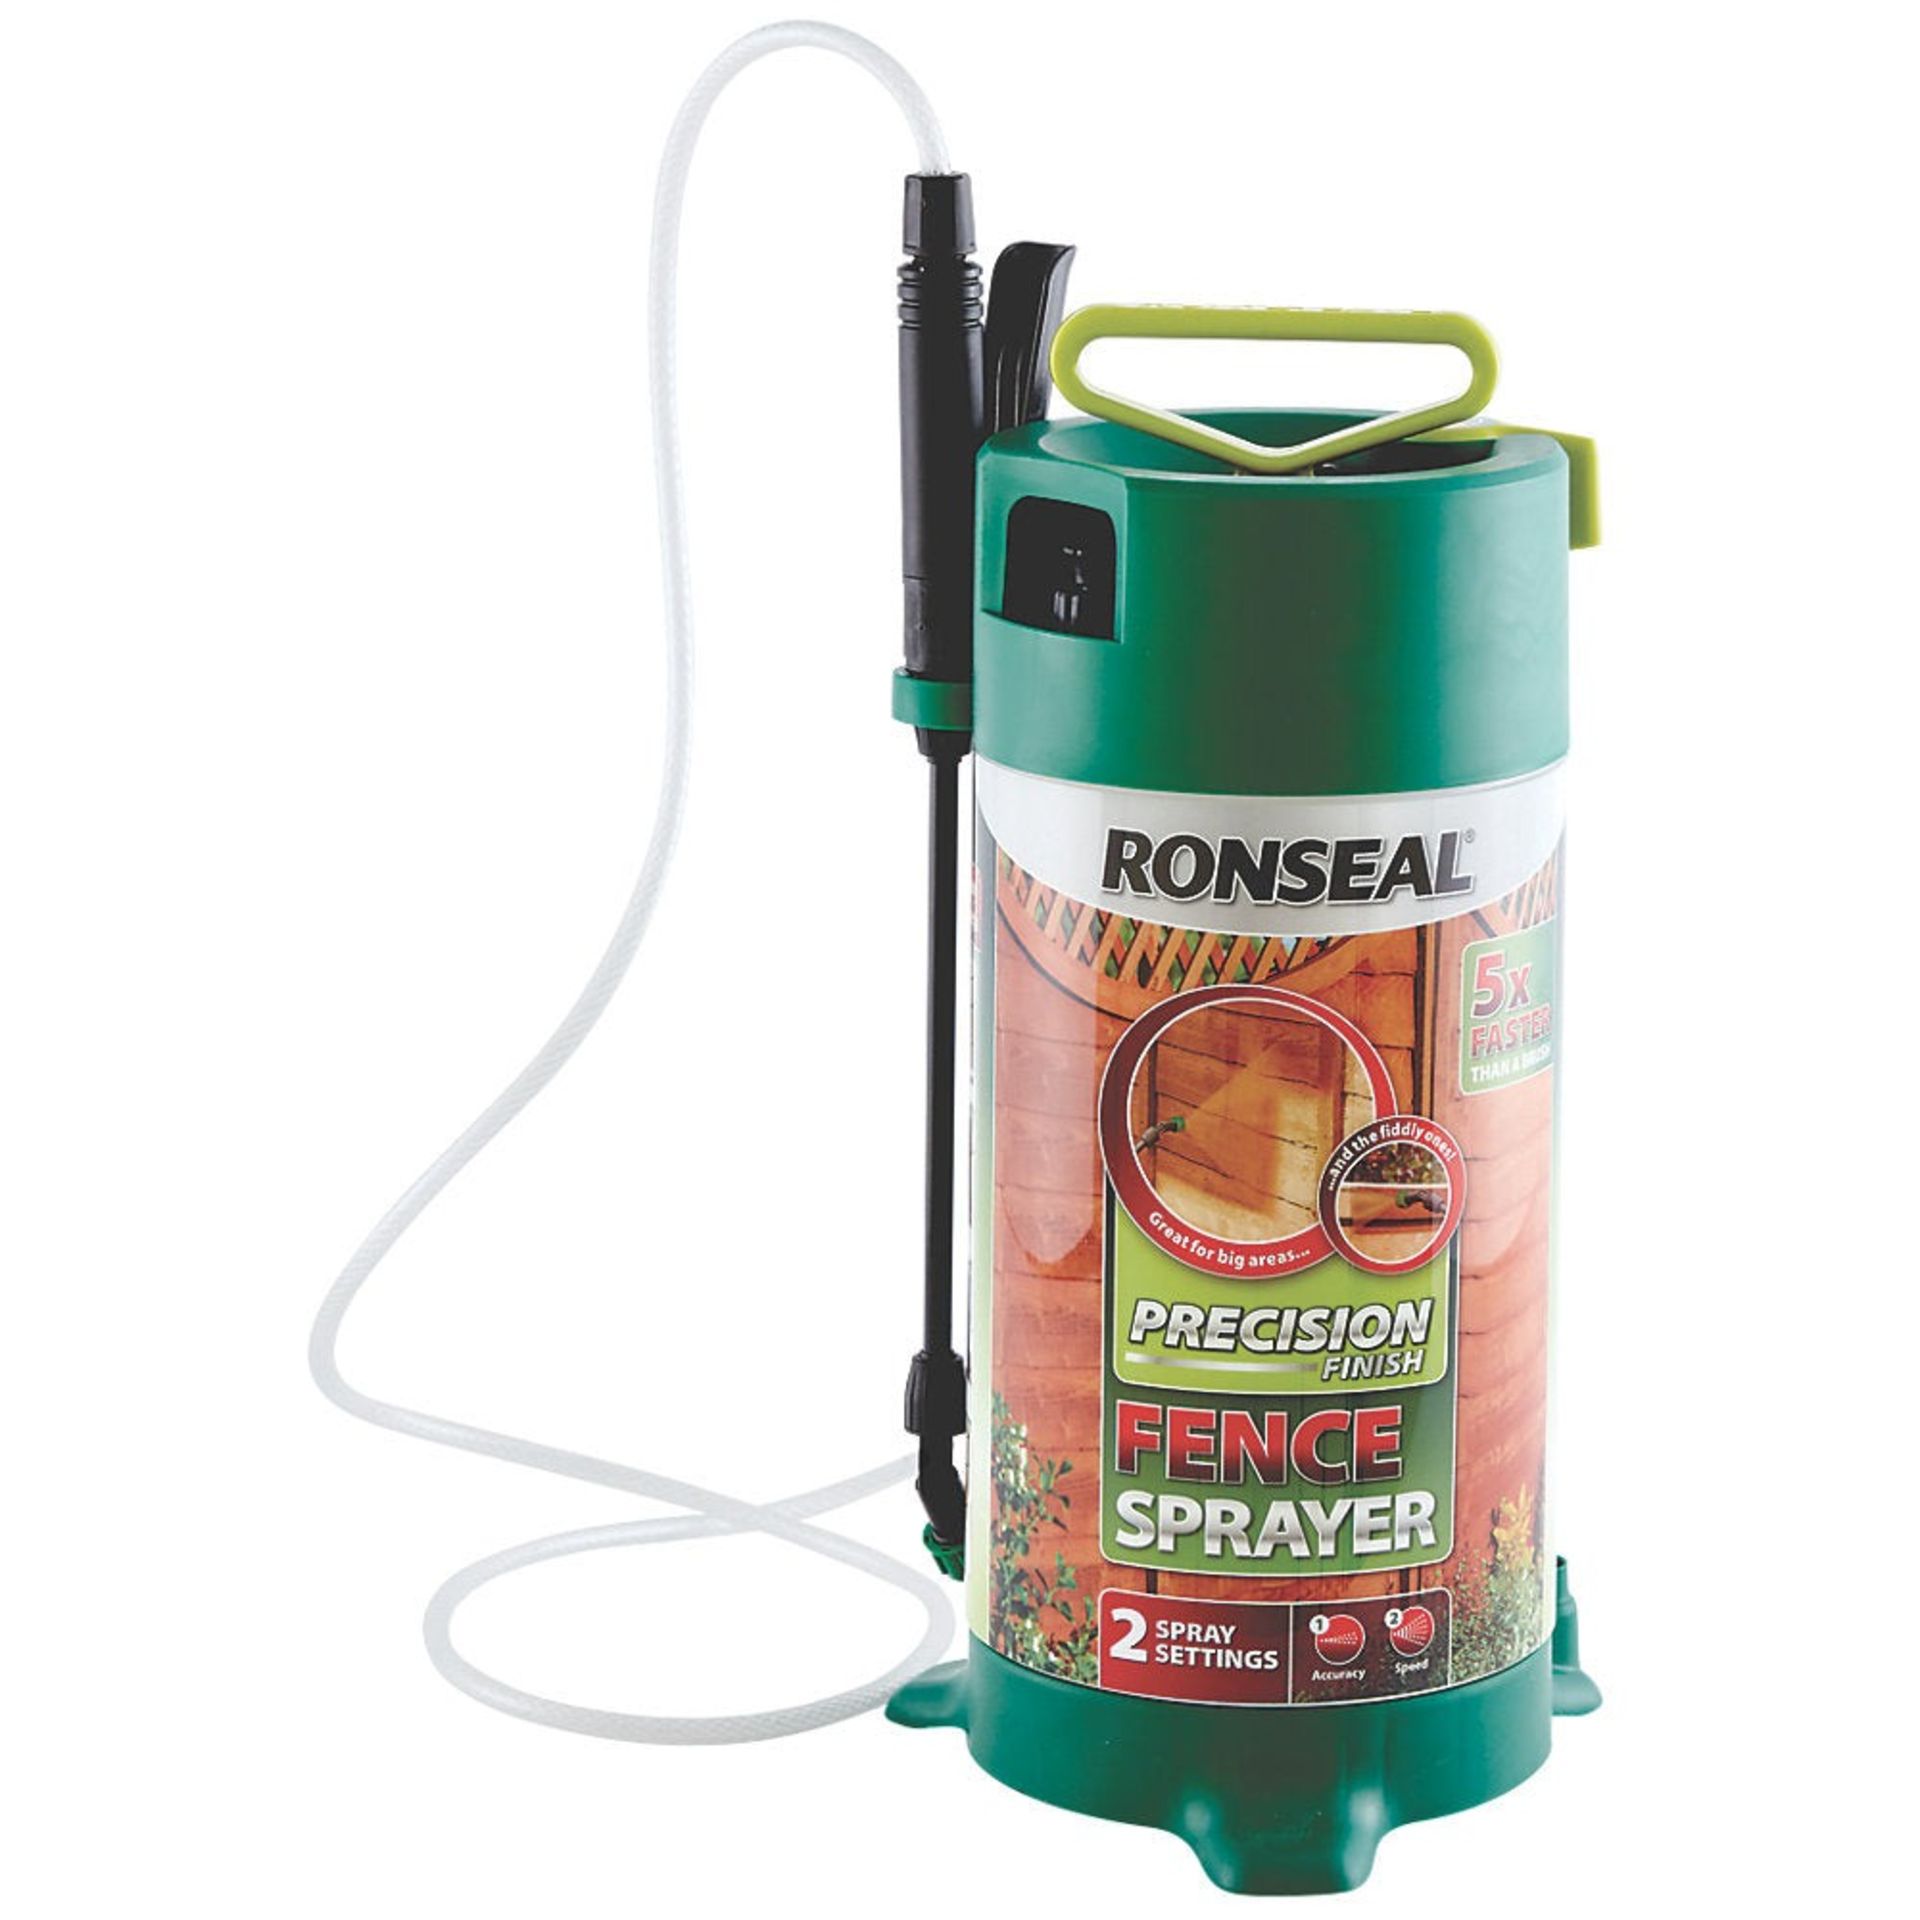 Ronseal Precision Finish Fence Sprayer 5L - ER48